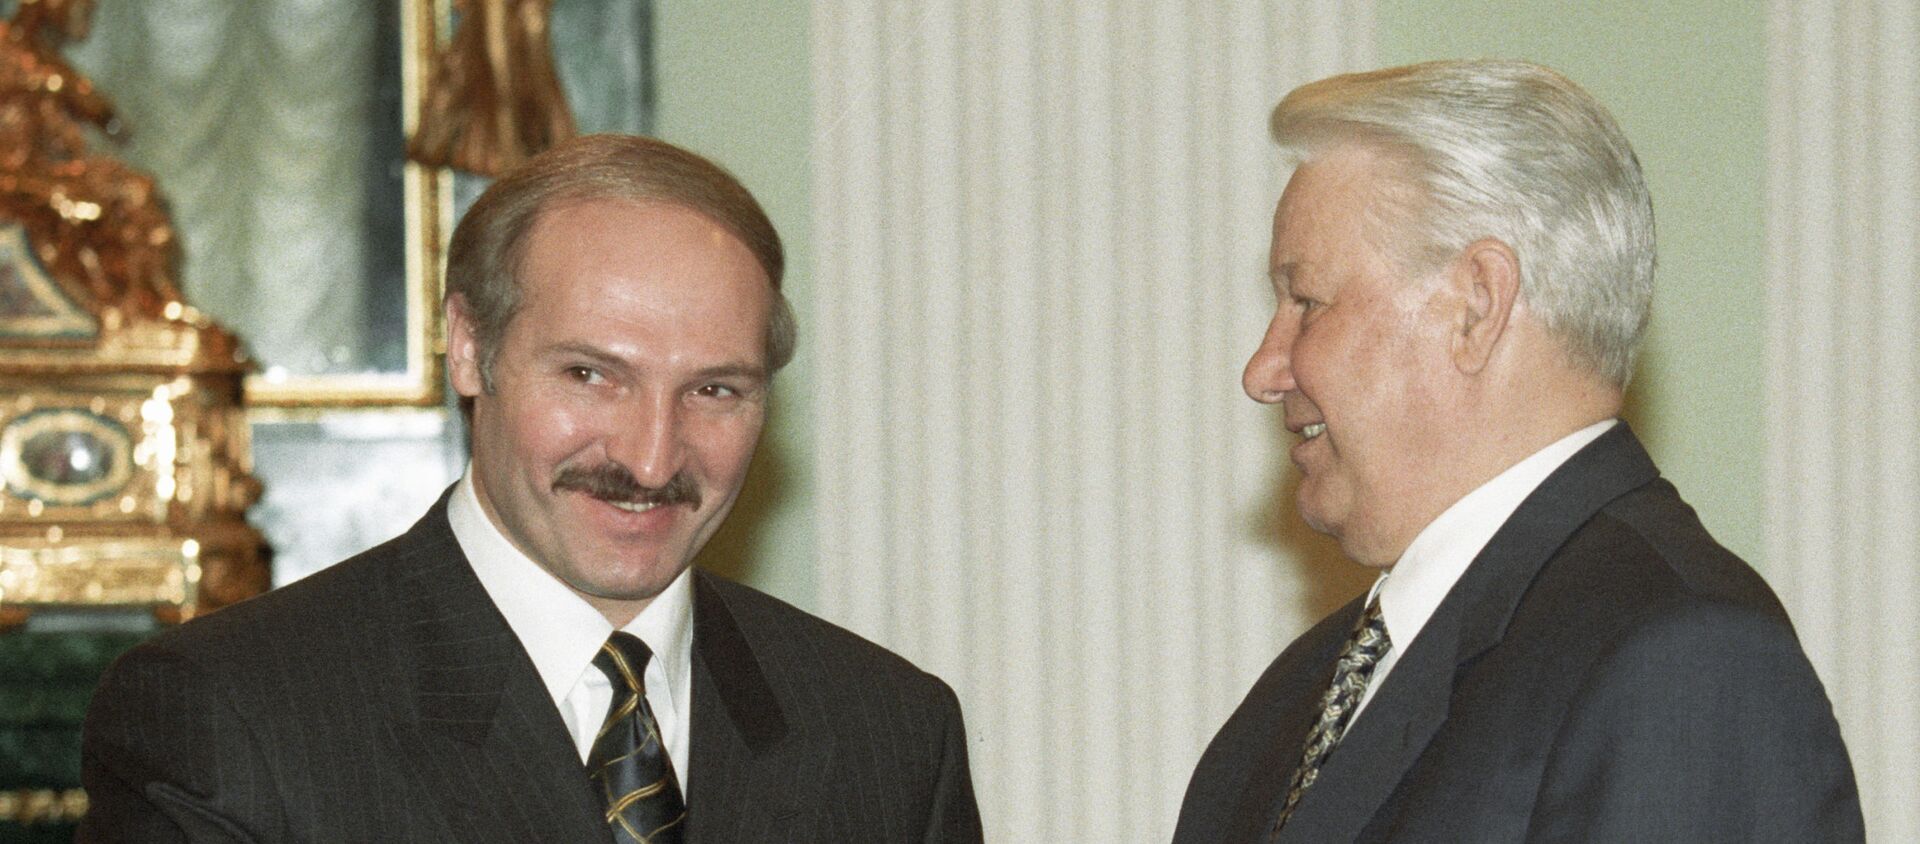 Александр Лукашенко и Борис Ельцин, 1998 год - Sputnik Беларусь, 1920, 14.12.2018